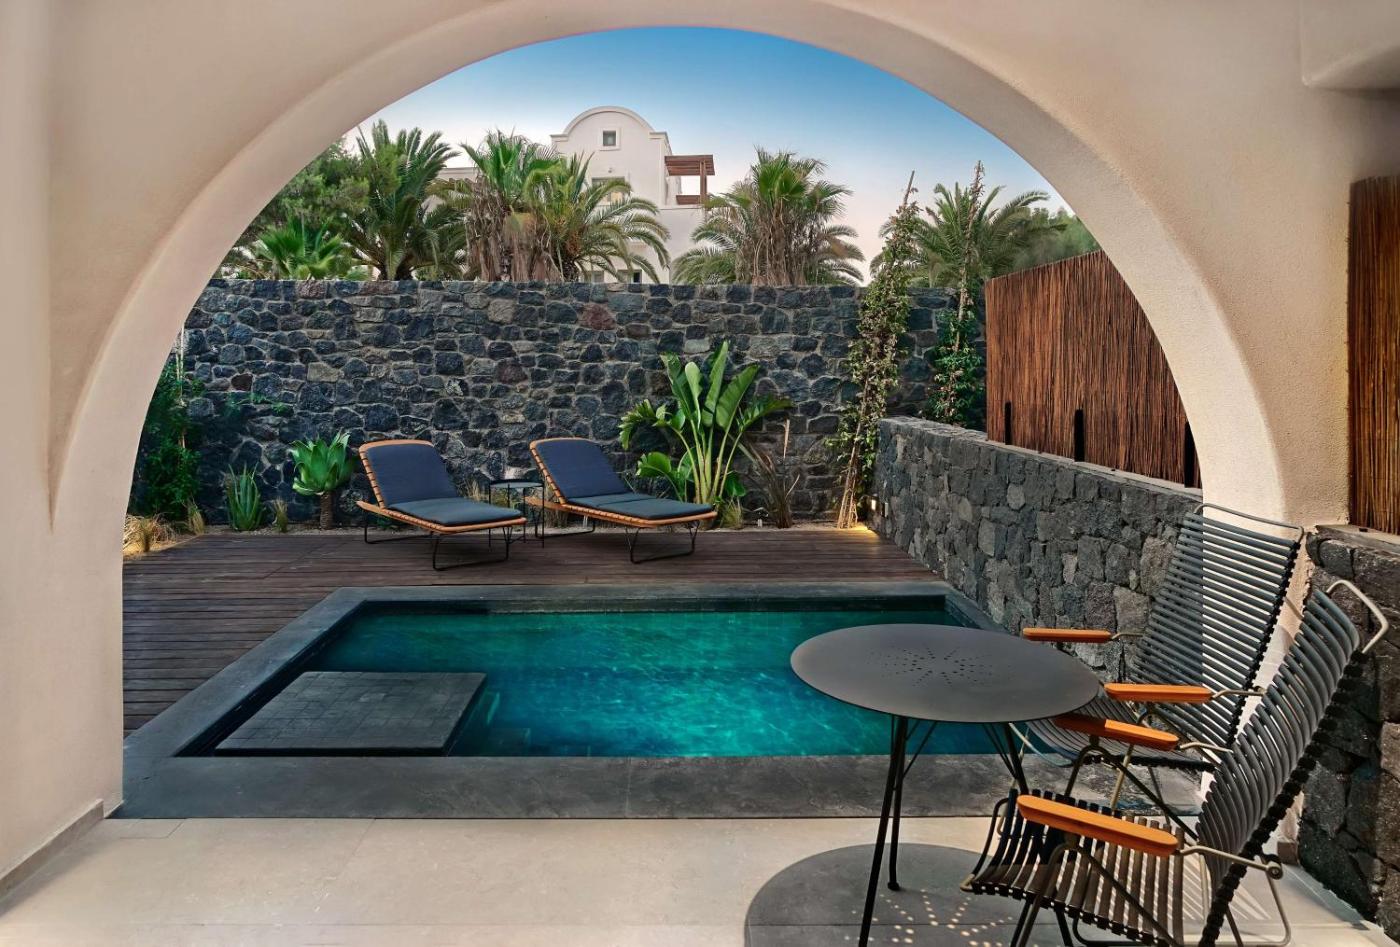 Hotel with private pool - Radisson Blu Zaffron Resort, Santorini